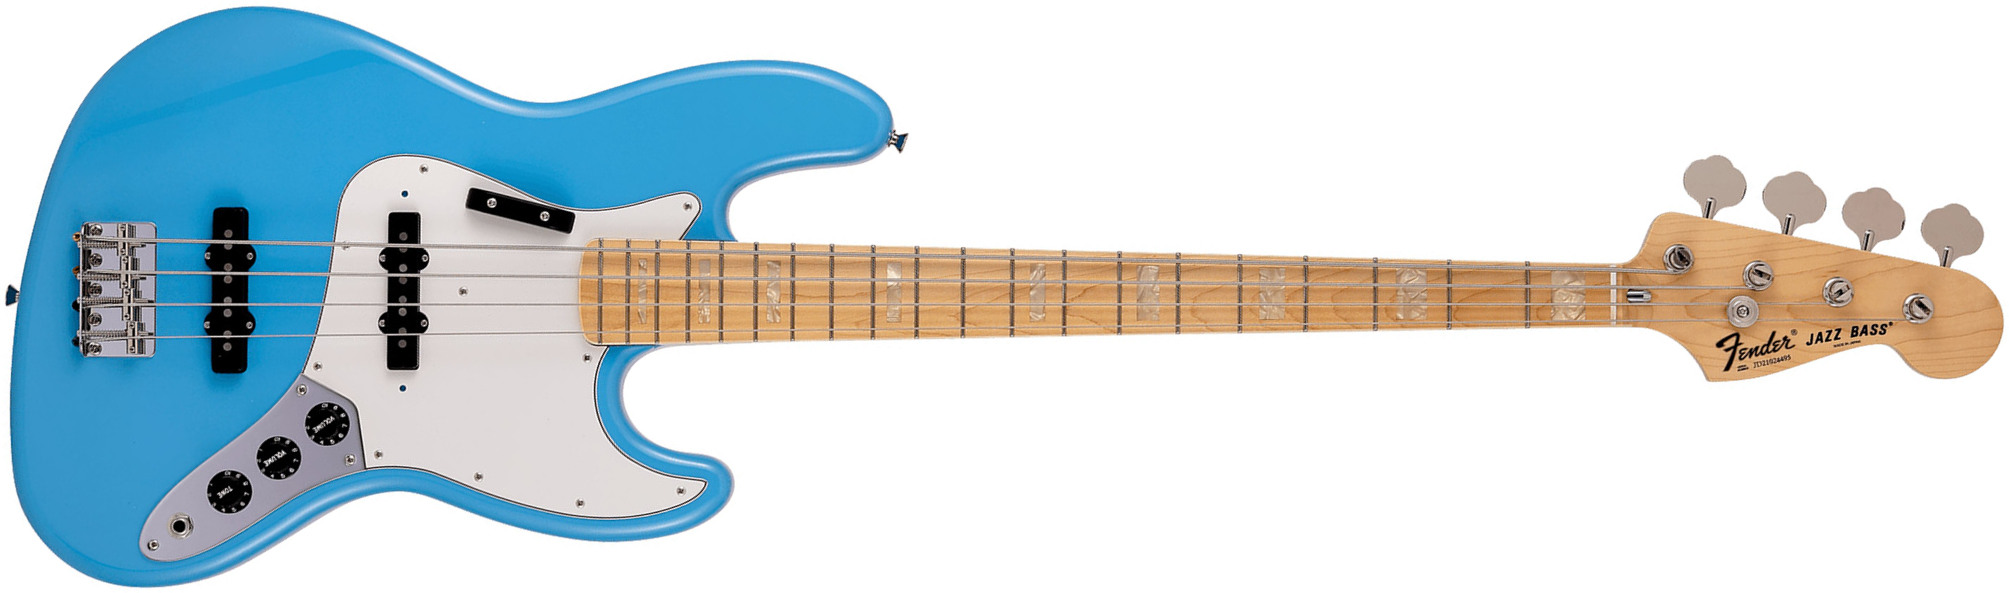 Fender Jazz Bass International Color Ltd Jap Mn - Maui Blue - Solid body elektrische bas - Main picture